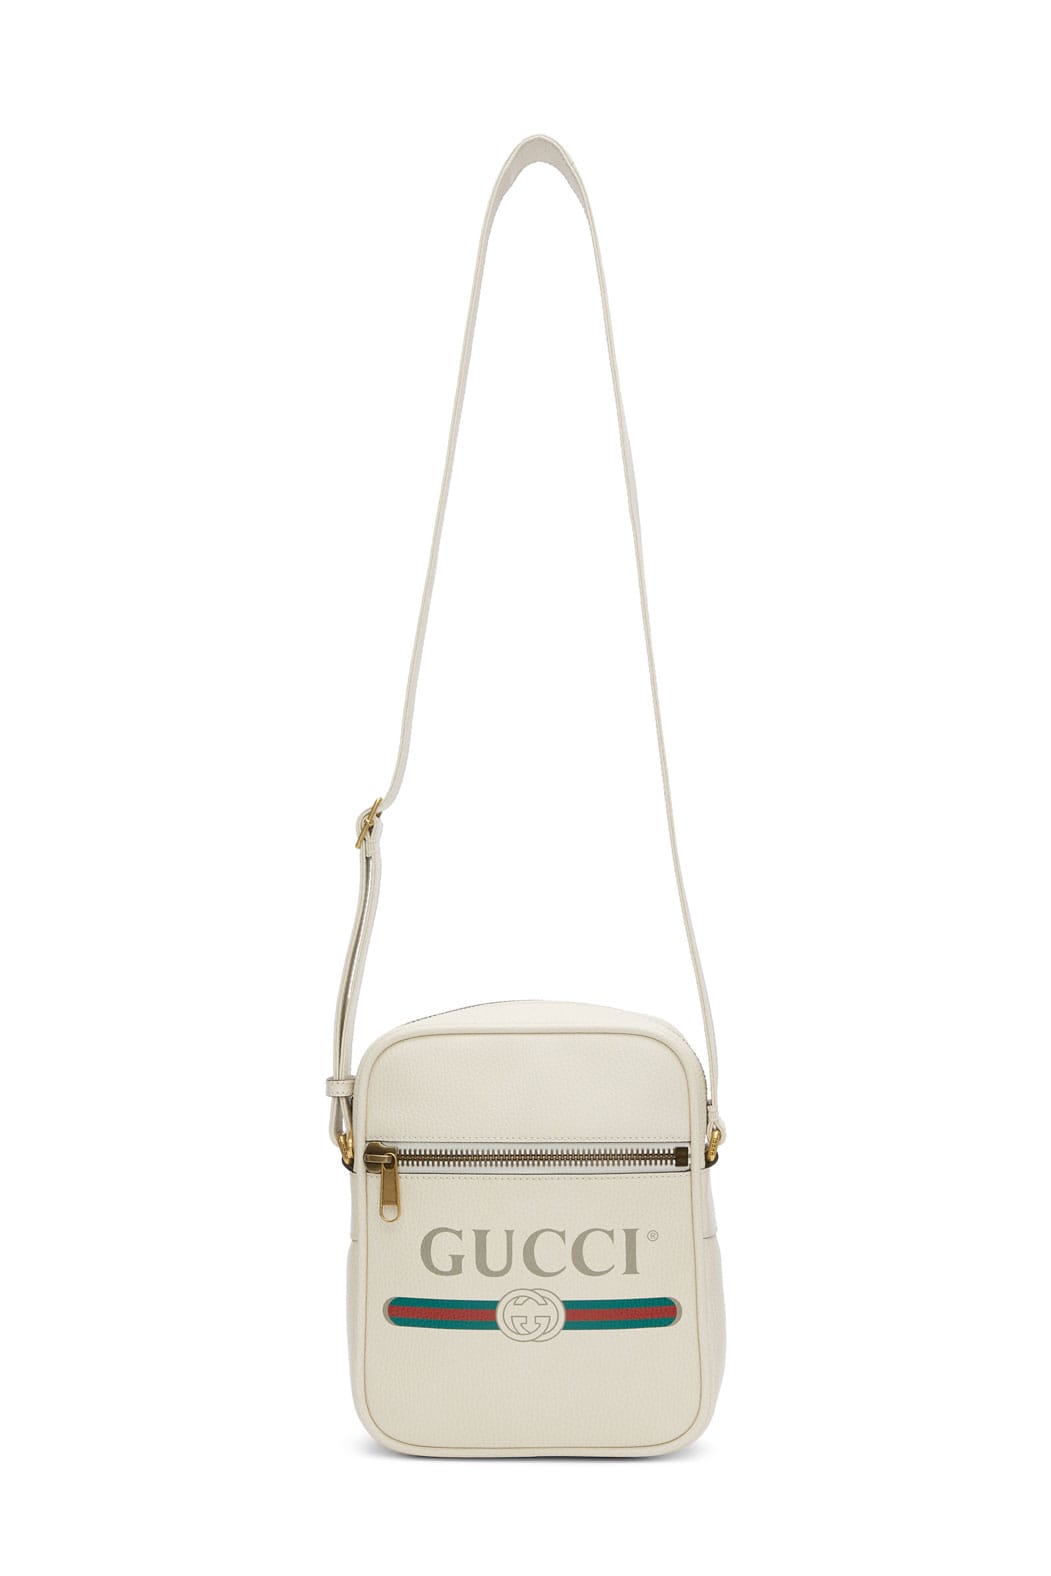 gucci logo sling bag